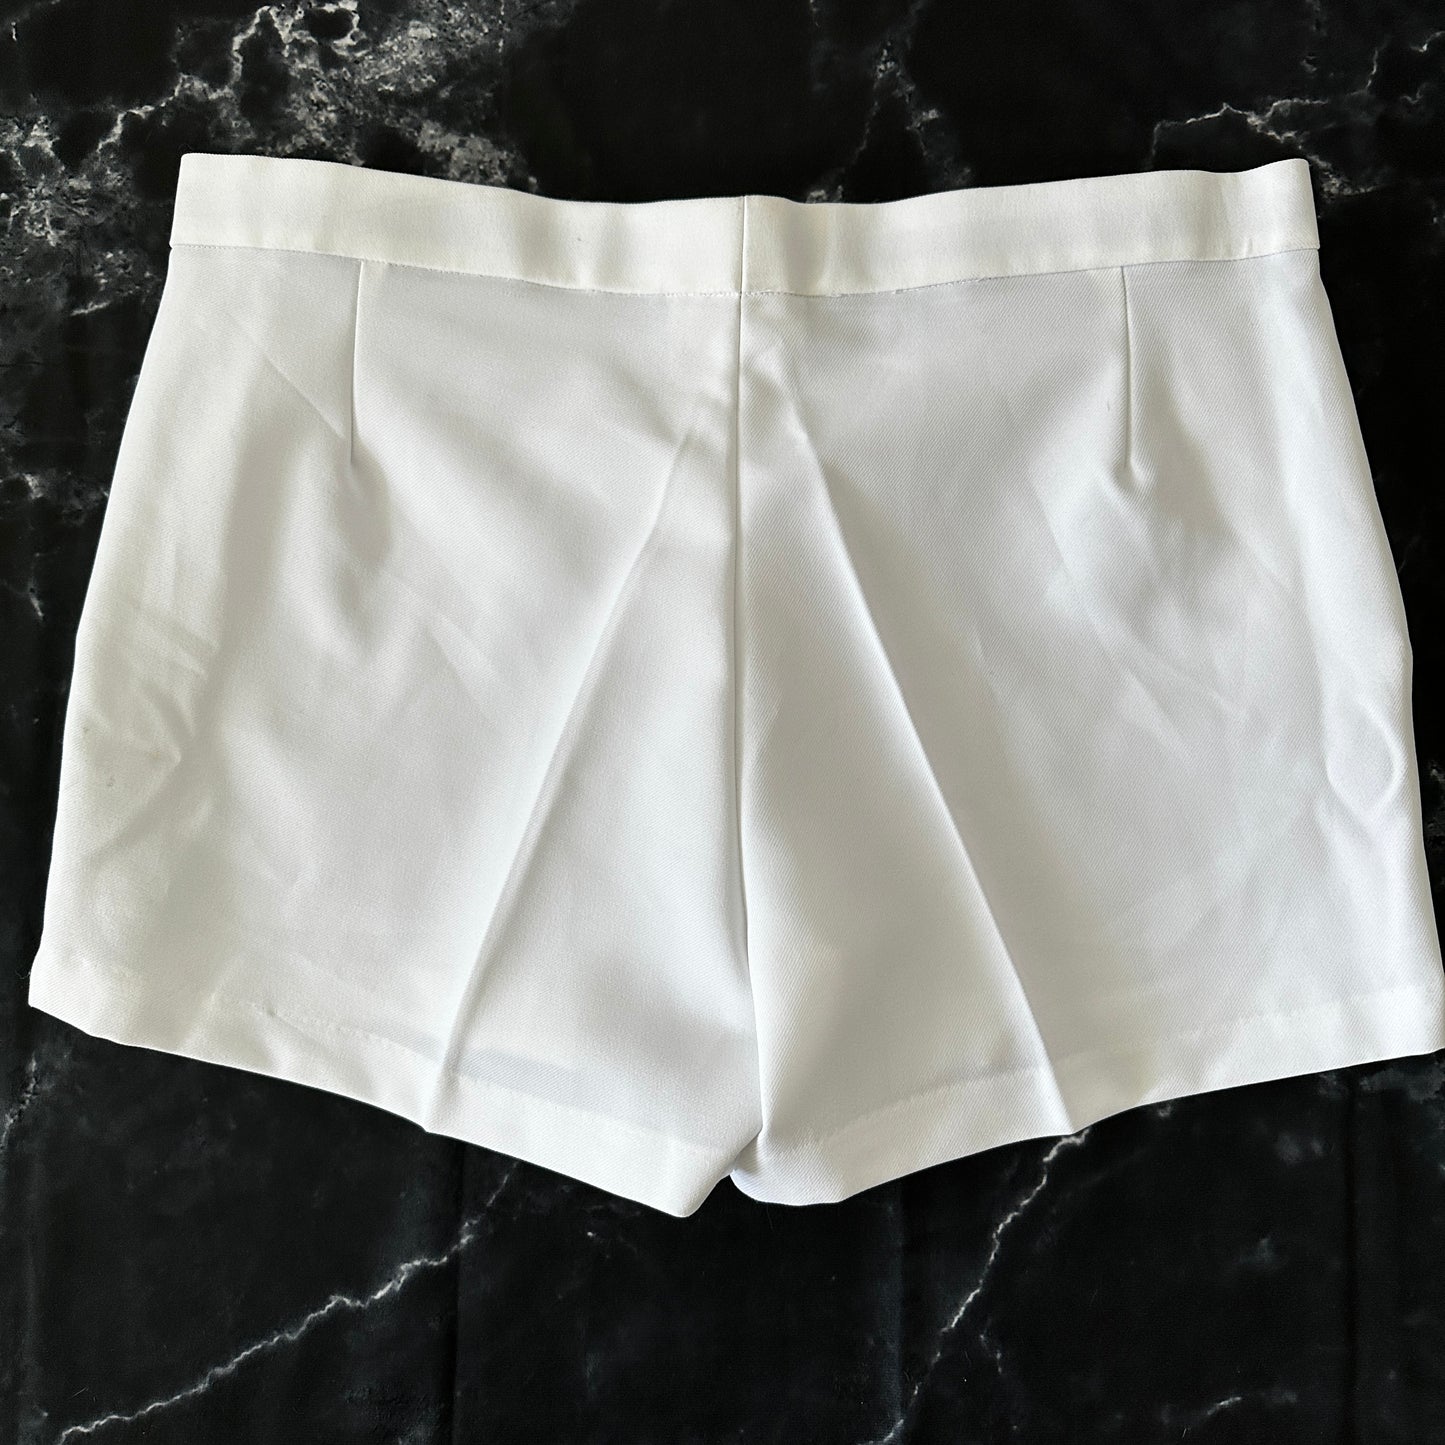 Adidas Vintage 80s Tennis Shorts - White - 54 / XL - Made in Japan